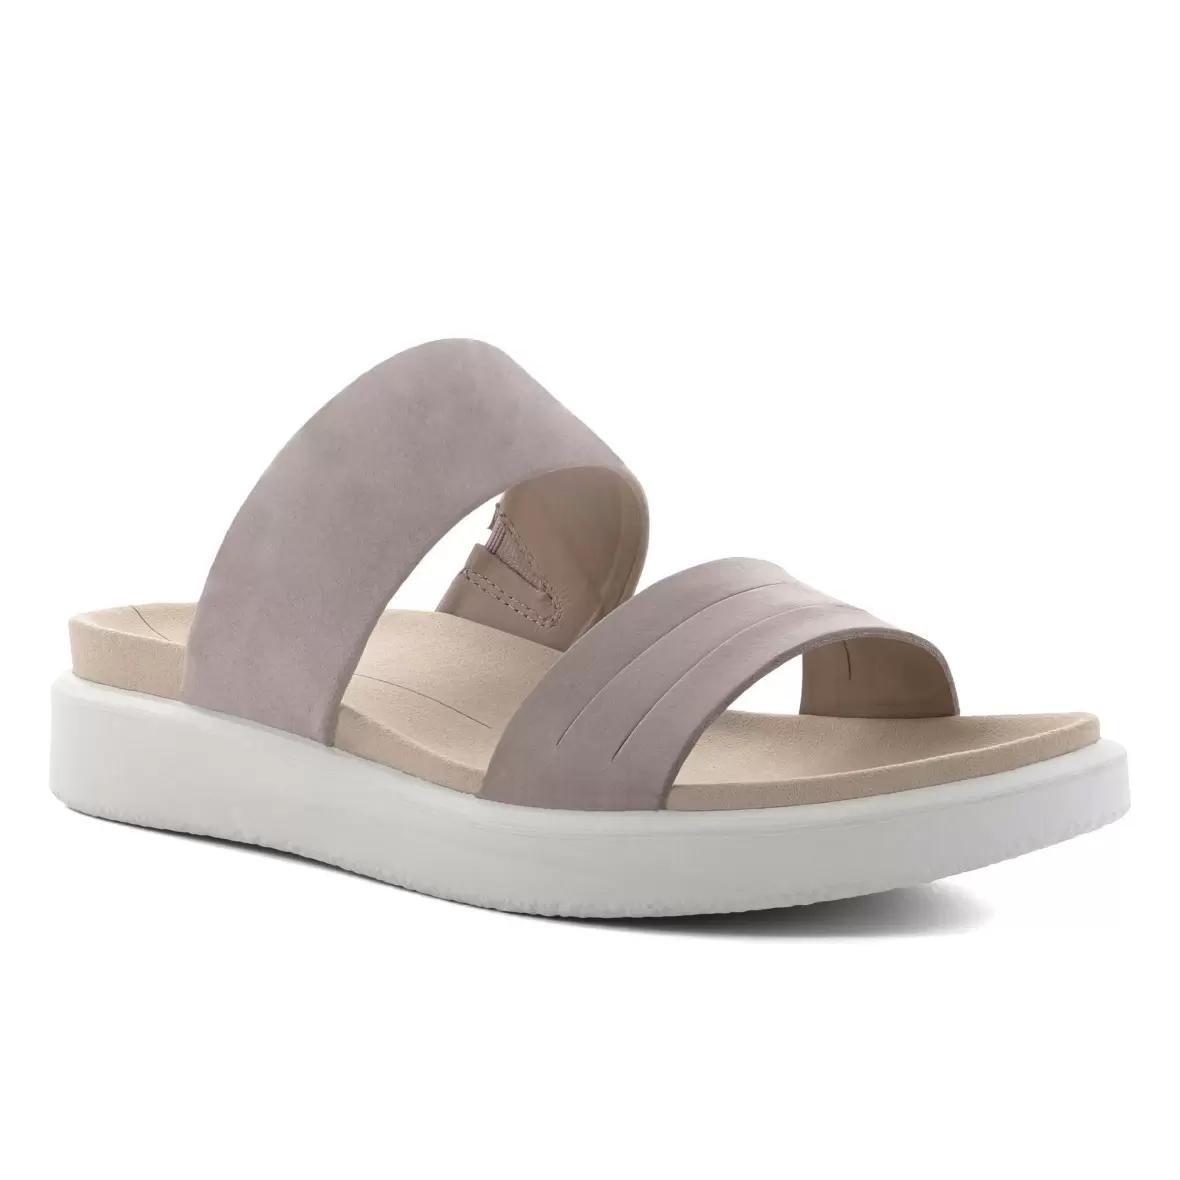 Flowt W 273623-51817 slippers sandal